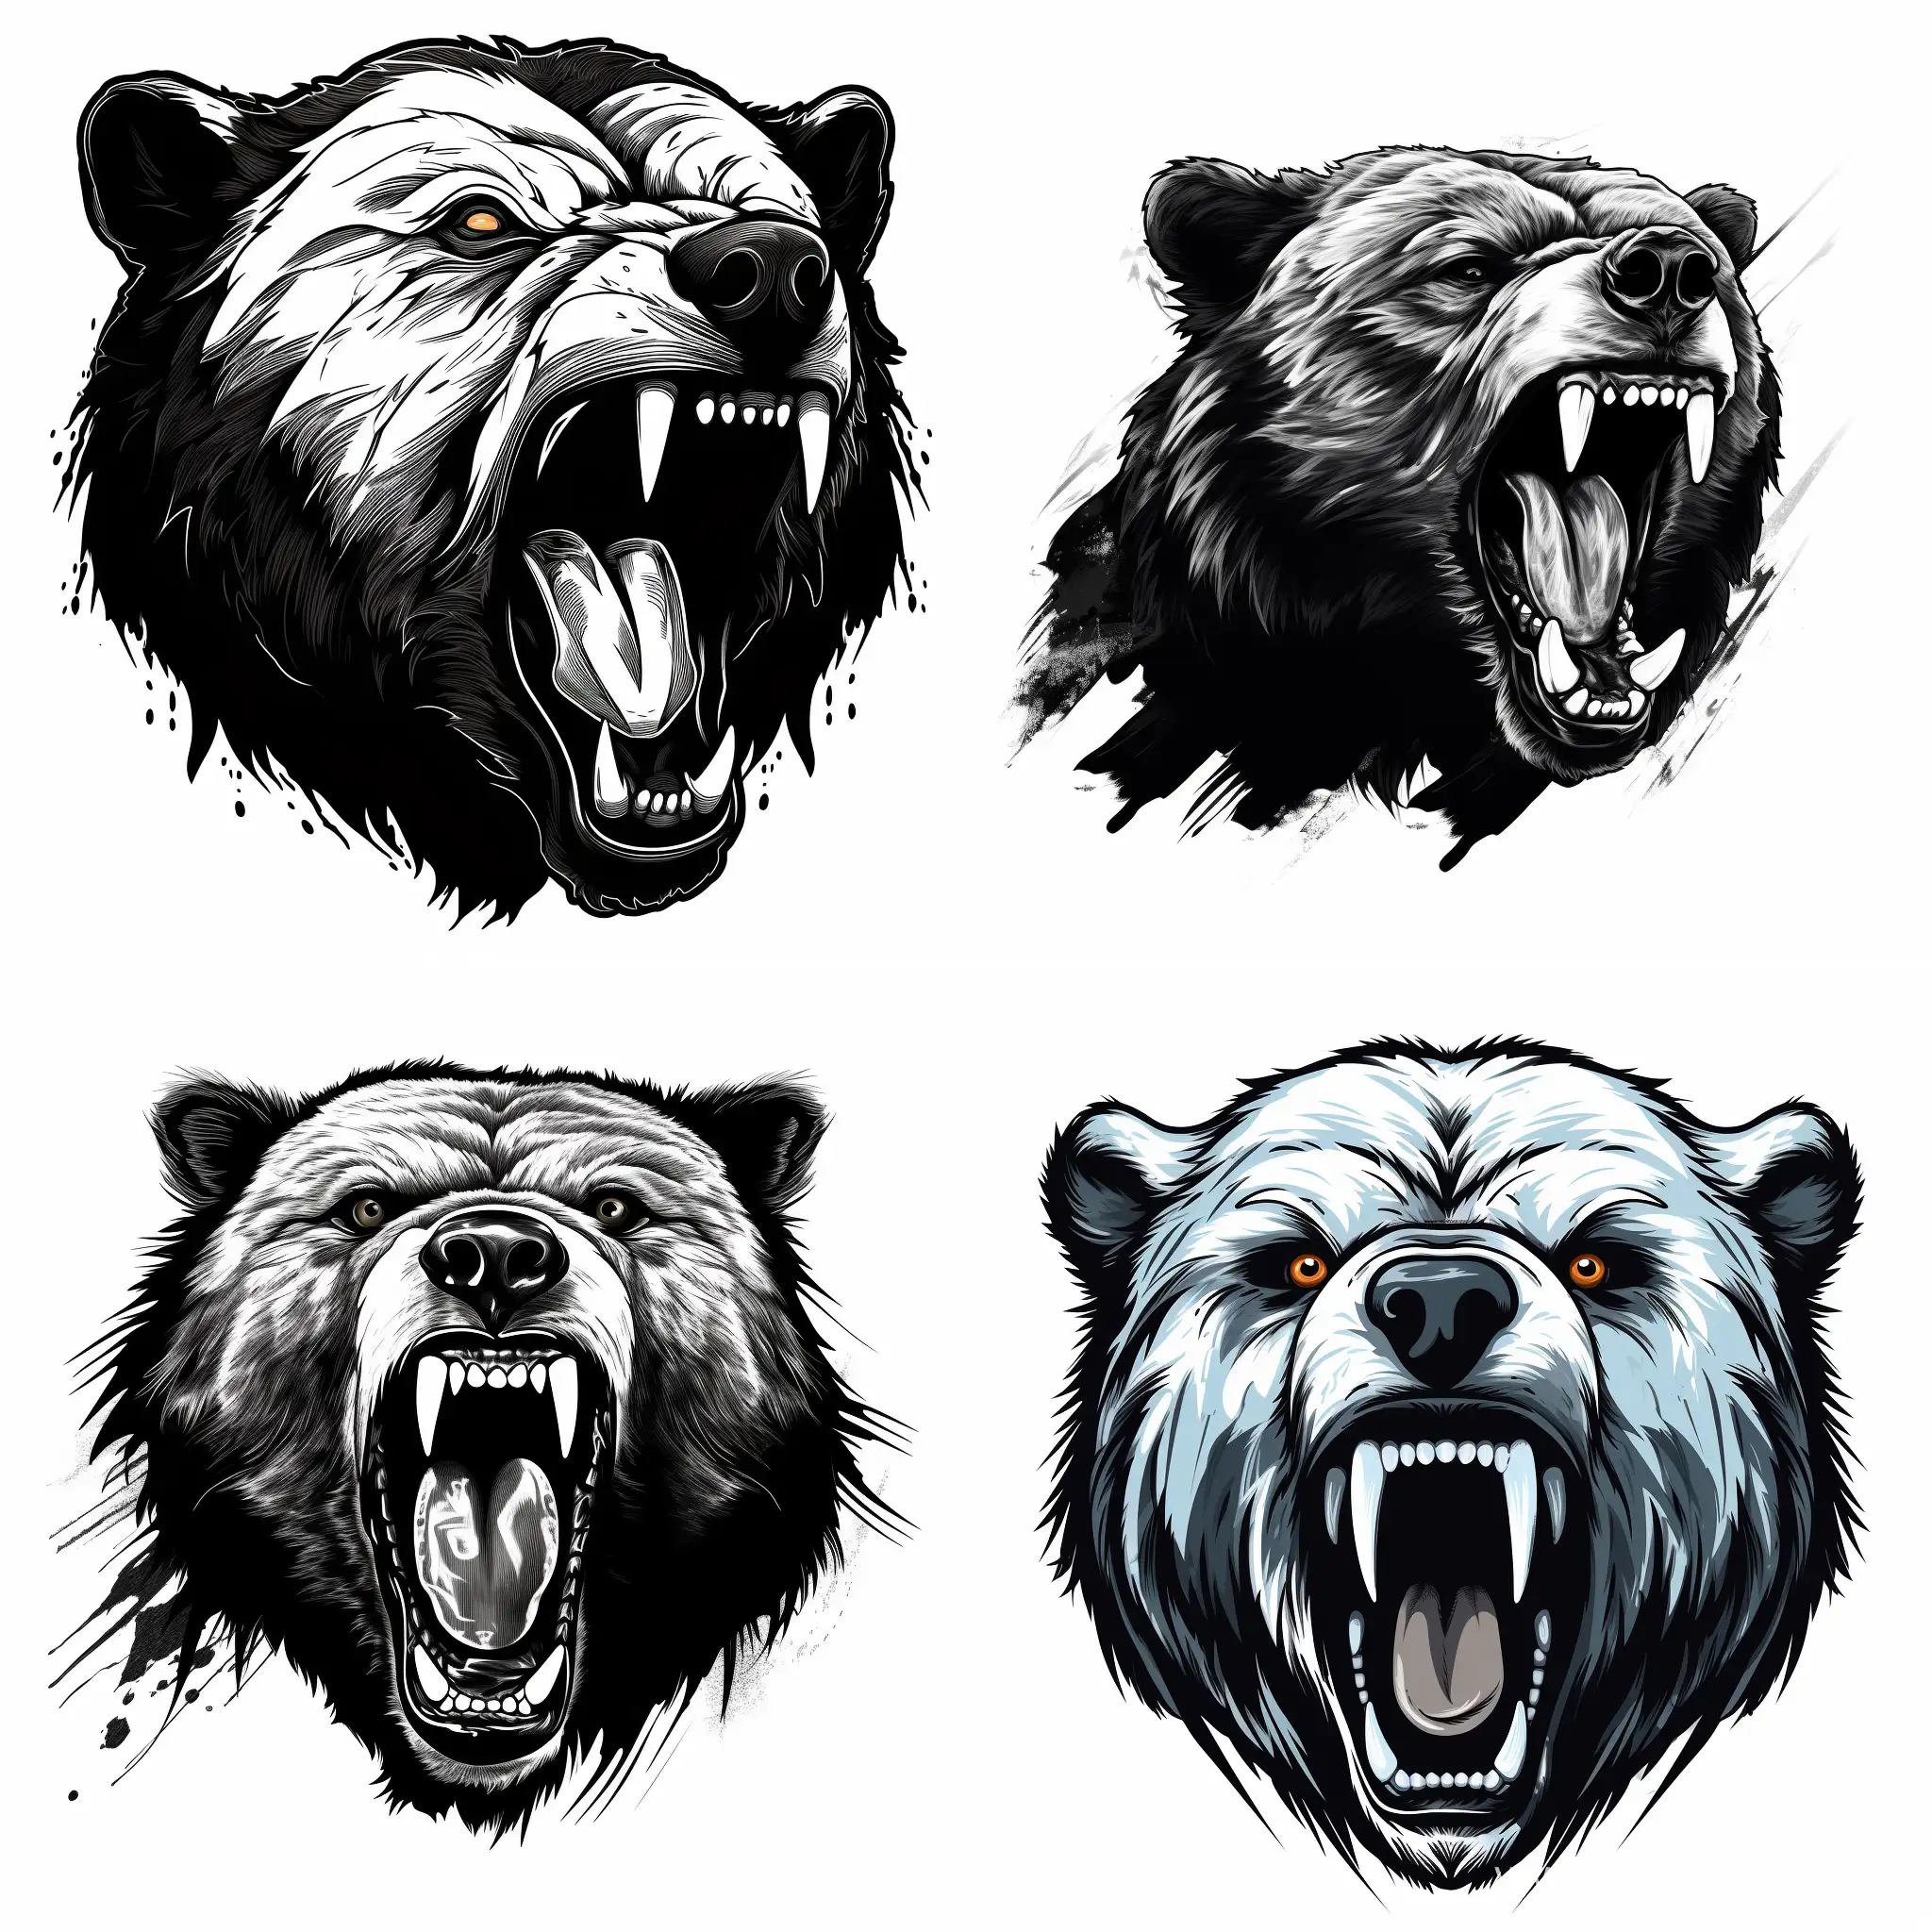 Roaring-Black-and-White-Bear-in-HighContrast-Vector-Art-Tournament